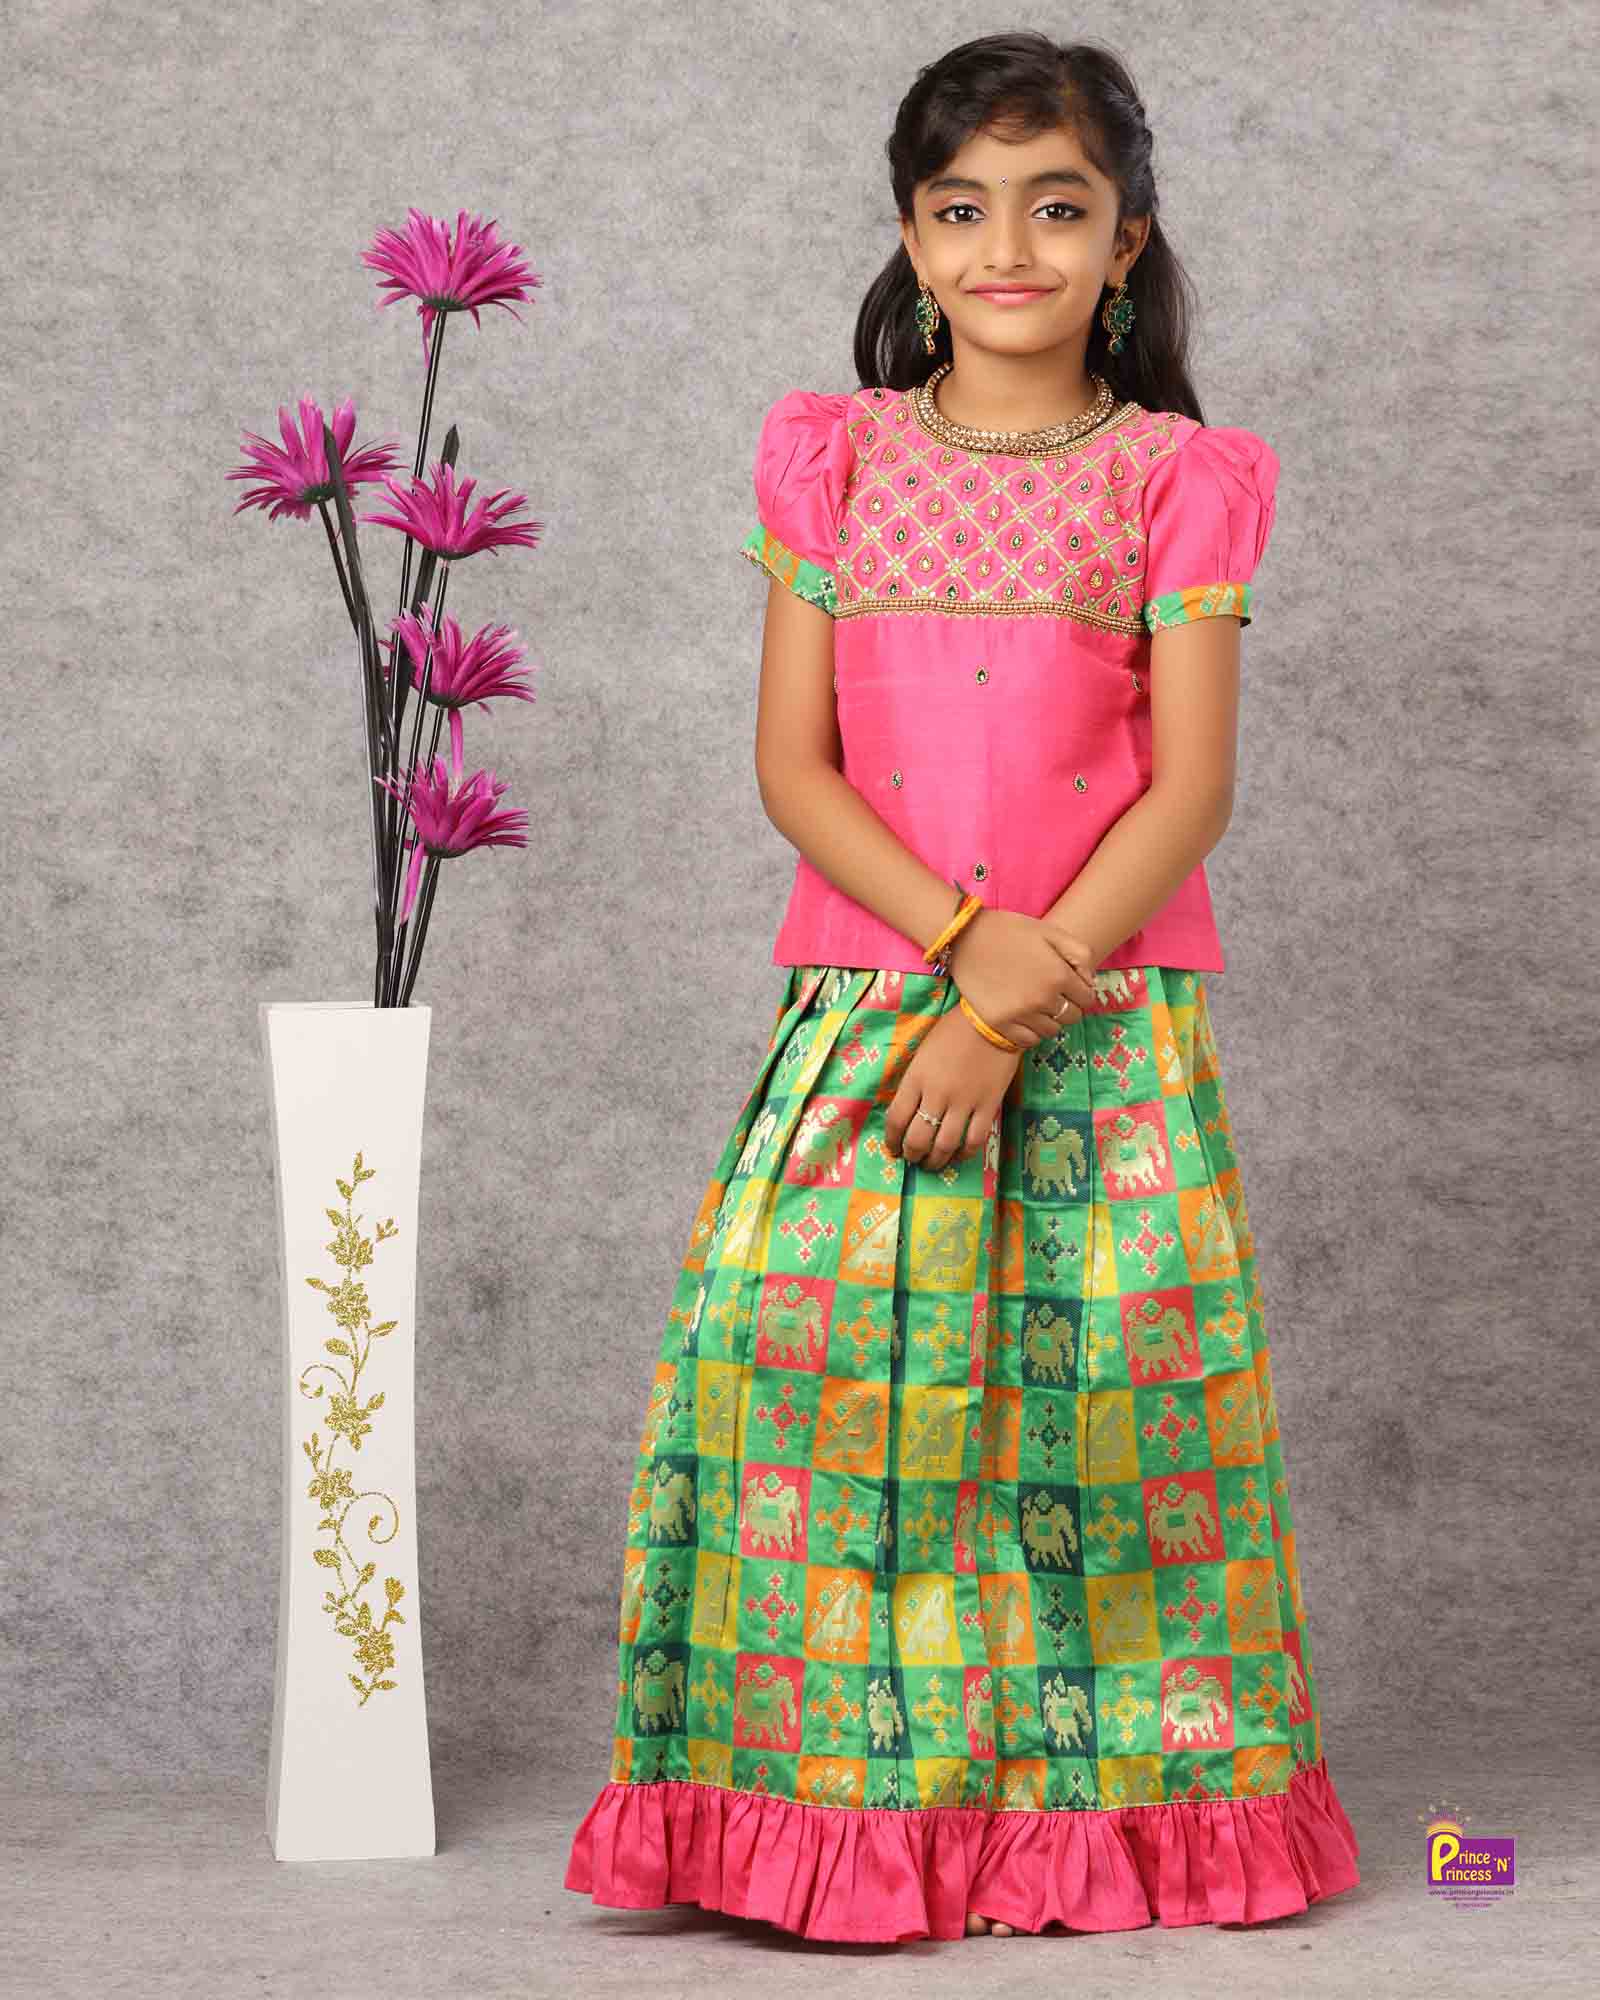 Buy small girls lehenga 10 years in India @ Limeroad